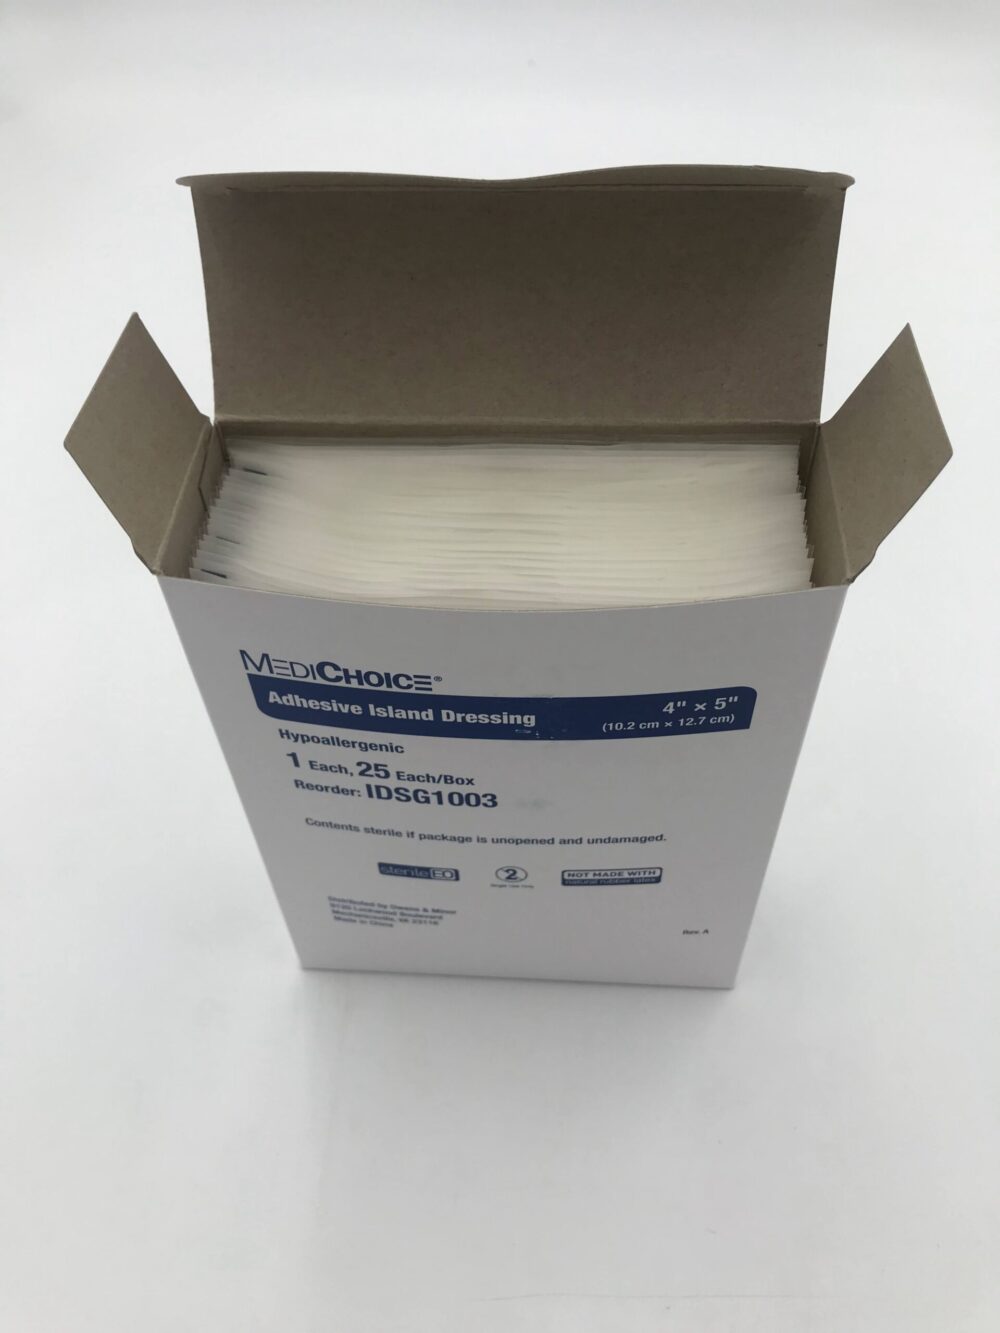 MediChoice IDSG1003 Adhesive Island Dressing 4x5in (25/Box)(X)